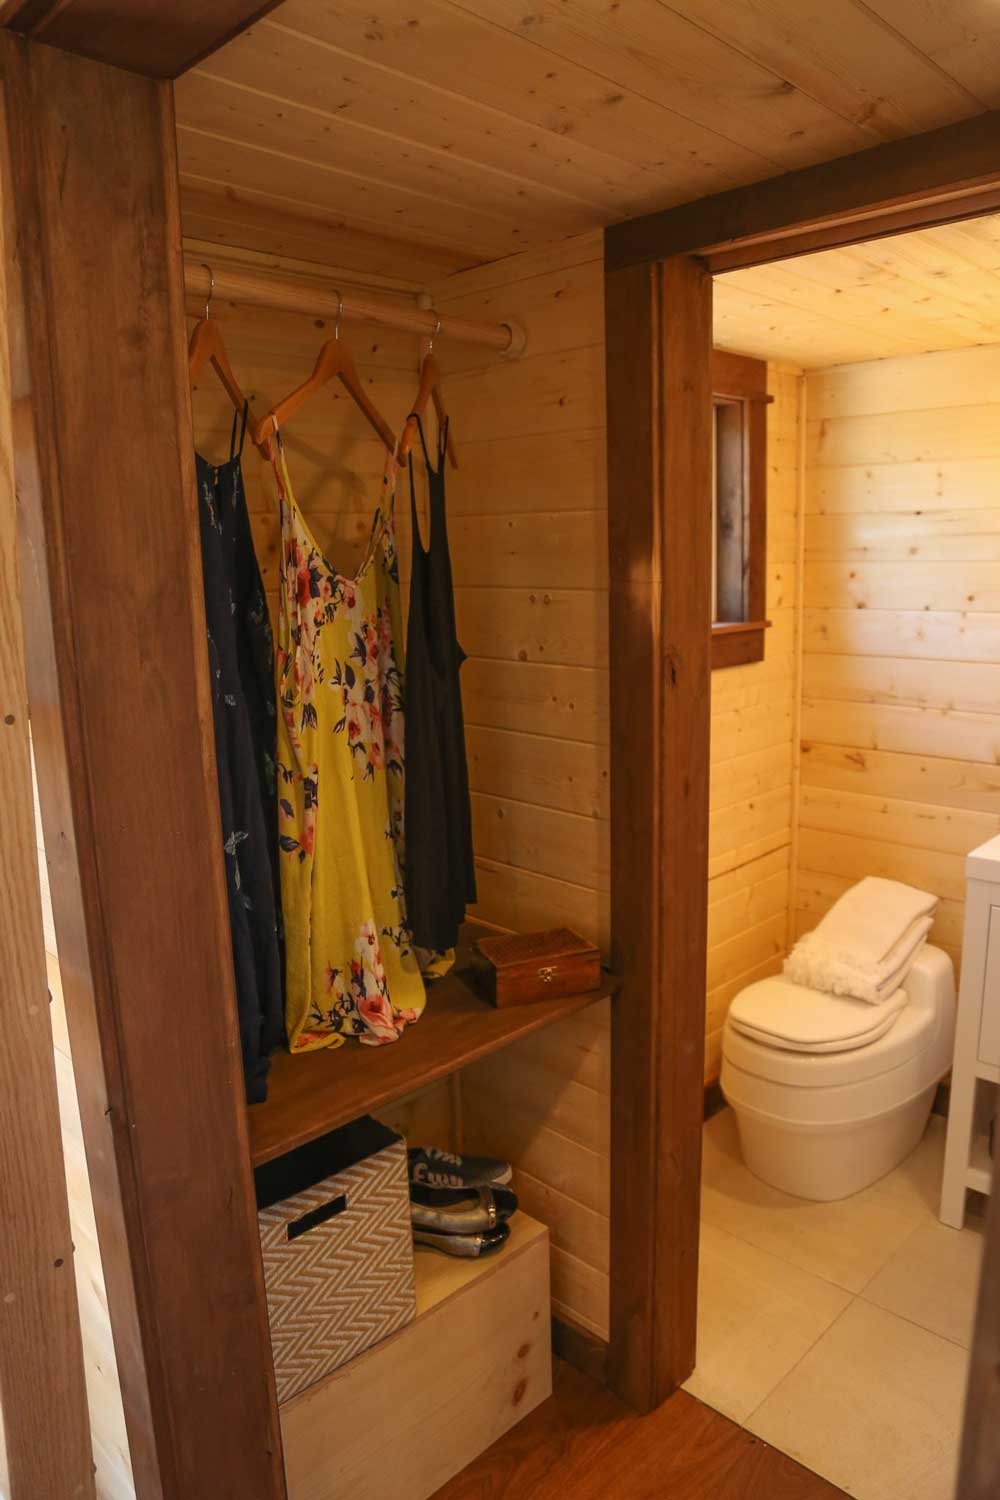 The closet and bathroom of the Tropical Getaway custom tiny house